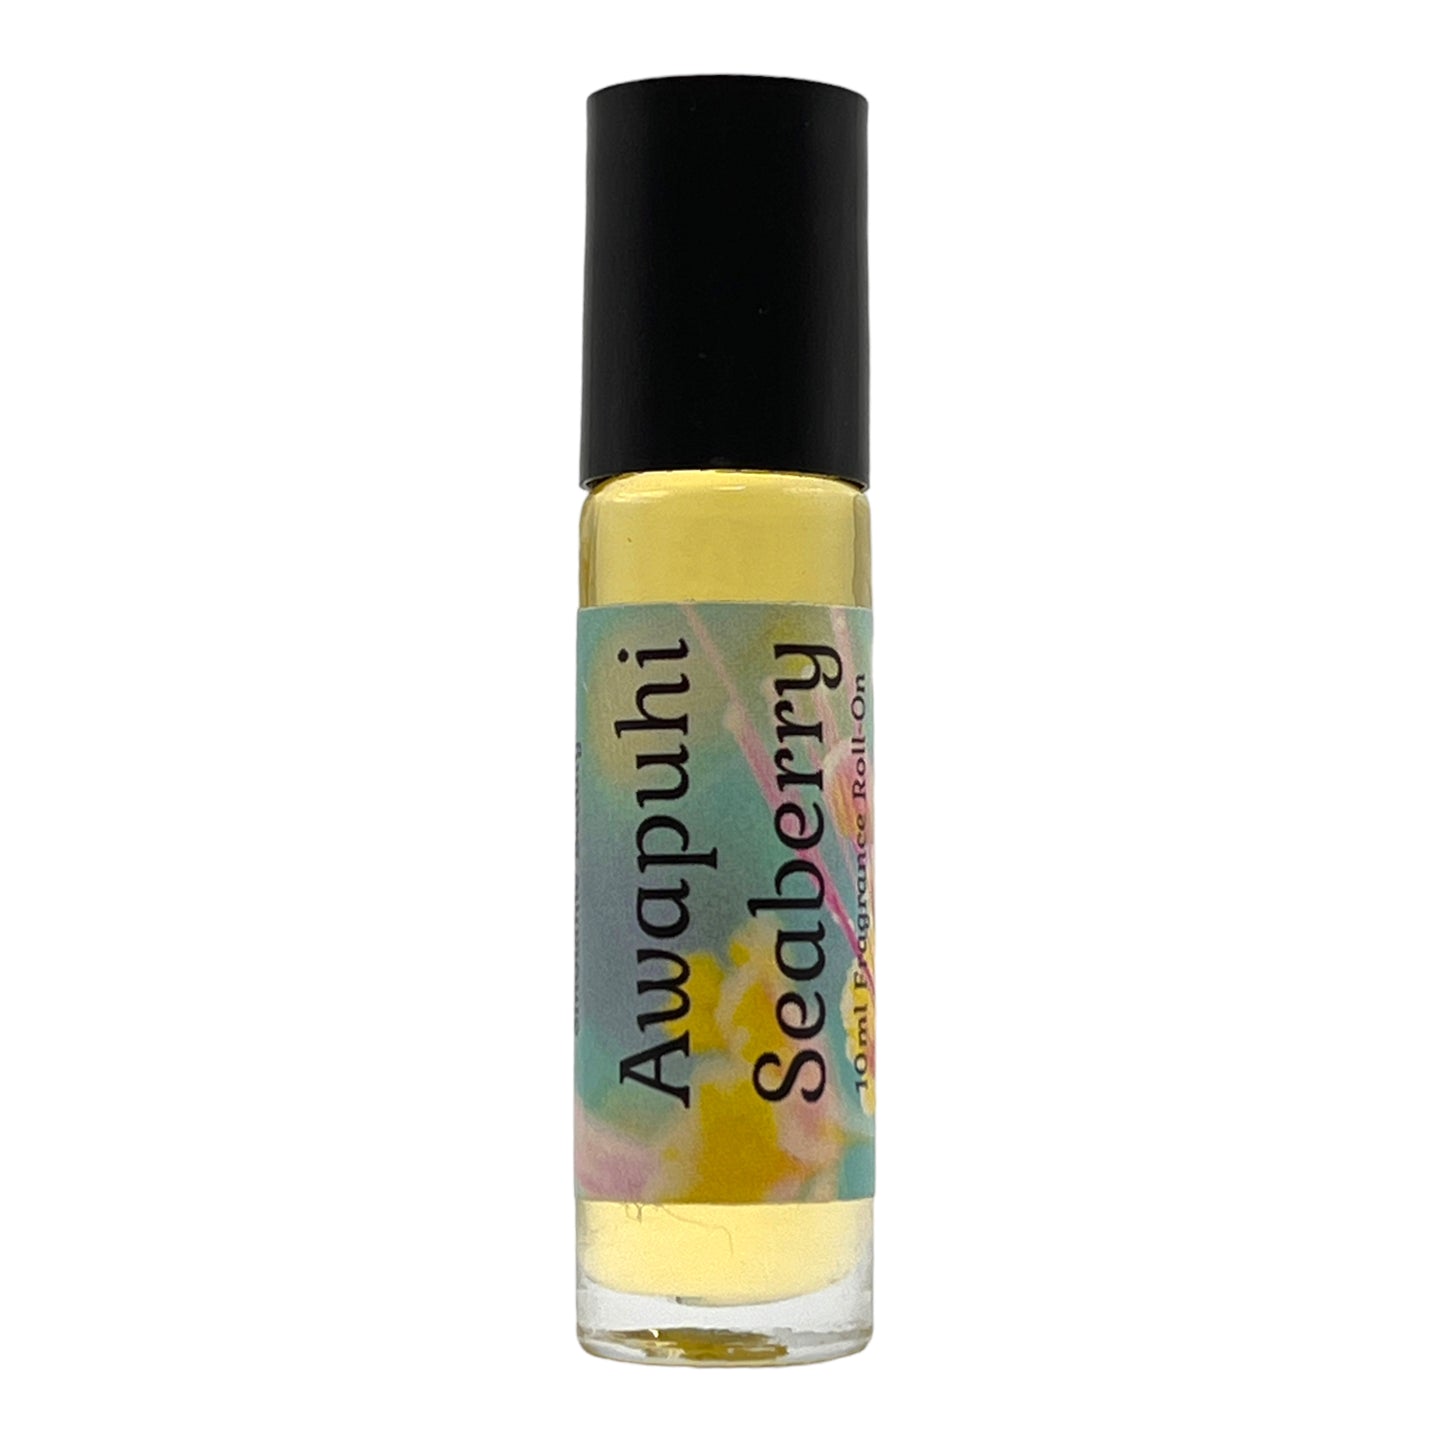 Awapuhi Seaberry Perfume Oil Fragrance Roll On